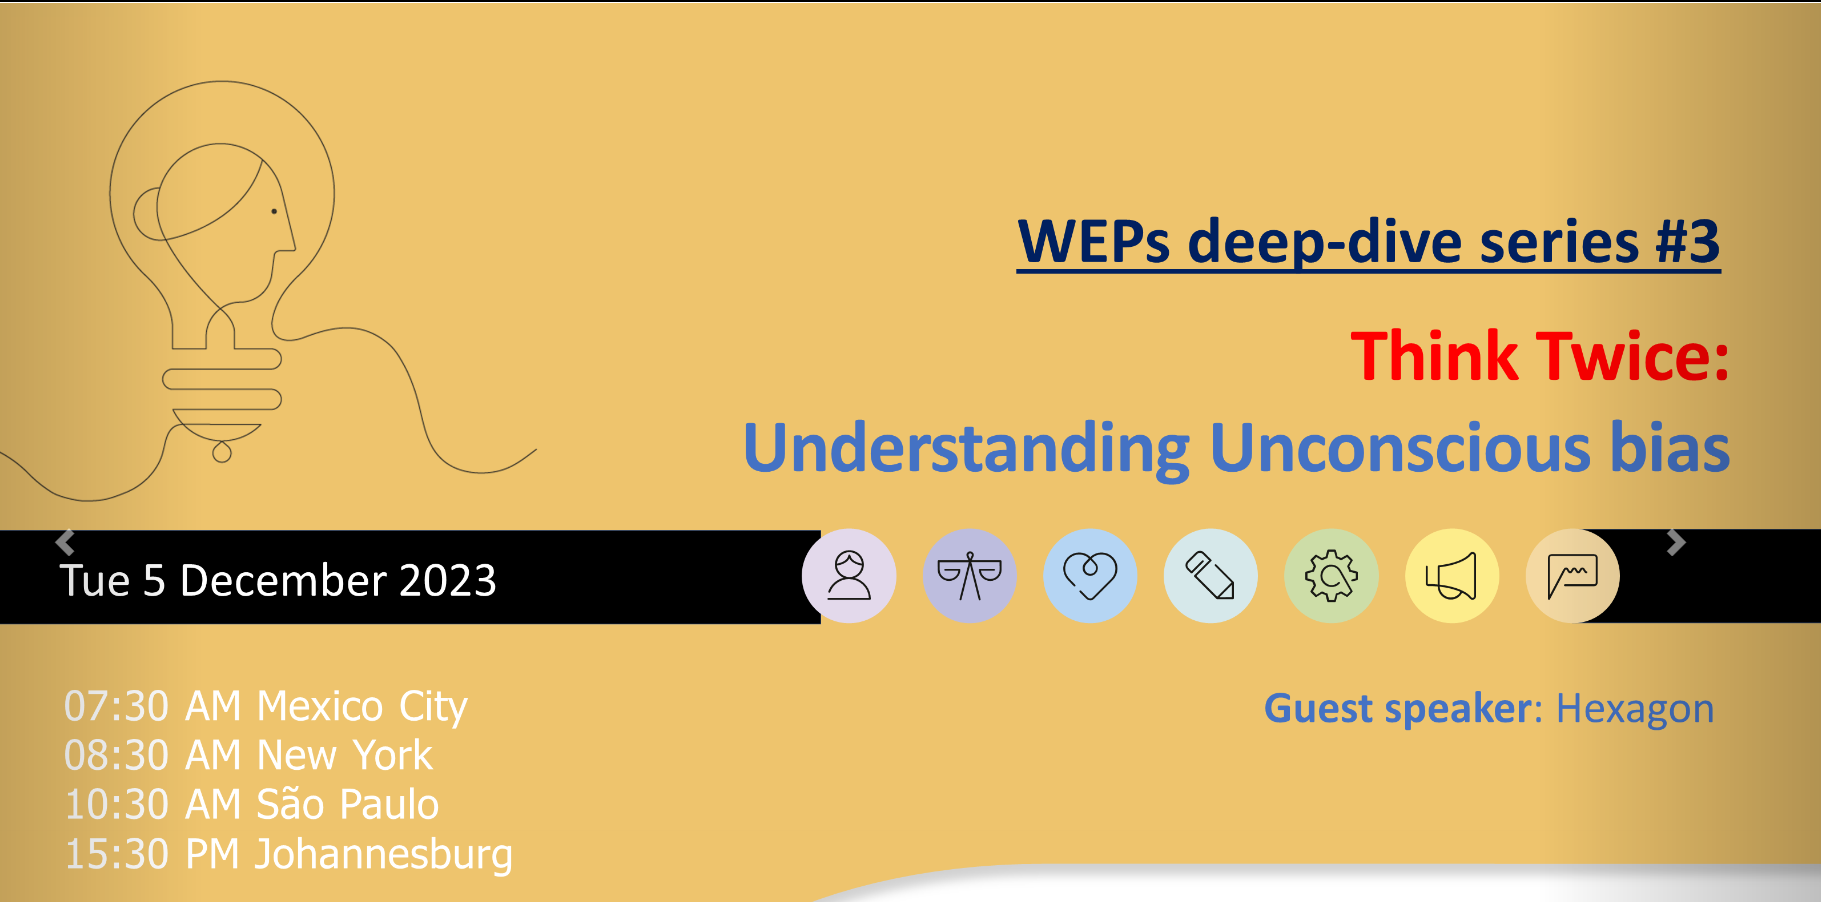 Think Twice: Understanding Unconscious Bias – a WEPs deep-dive series #3